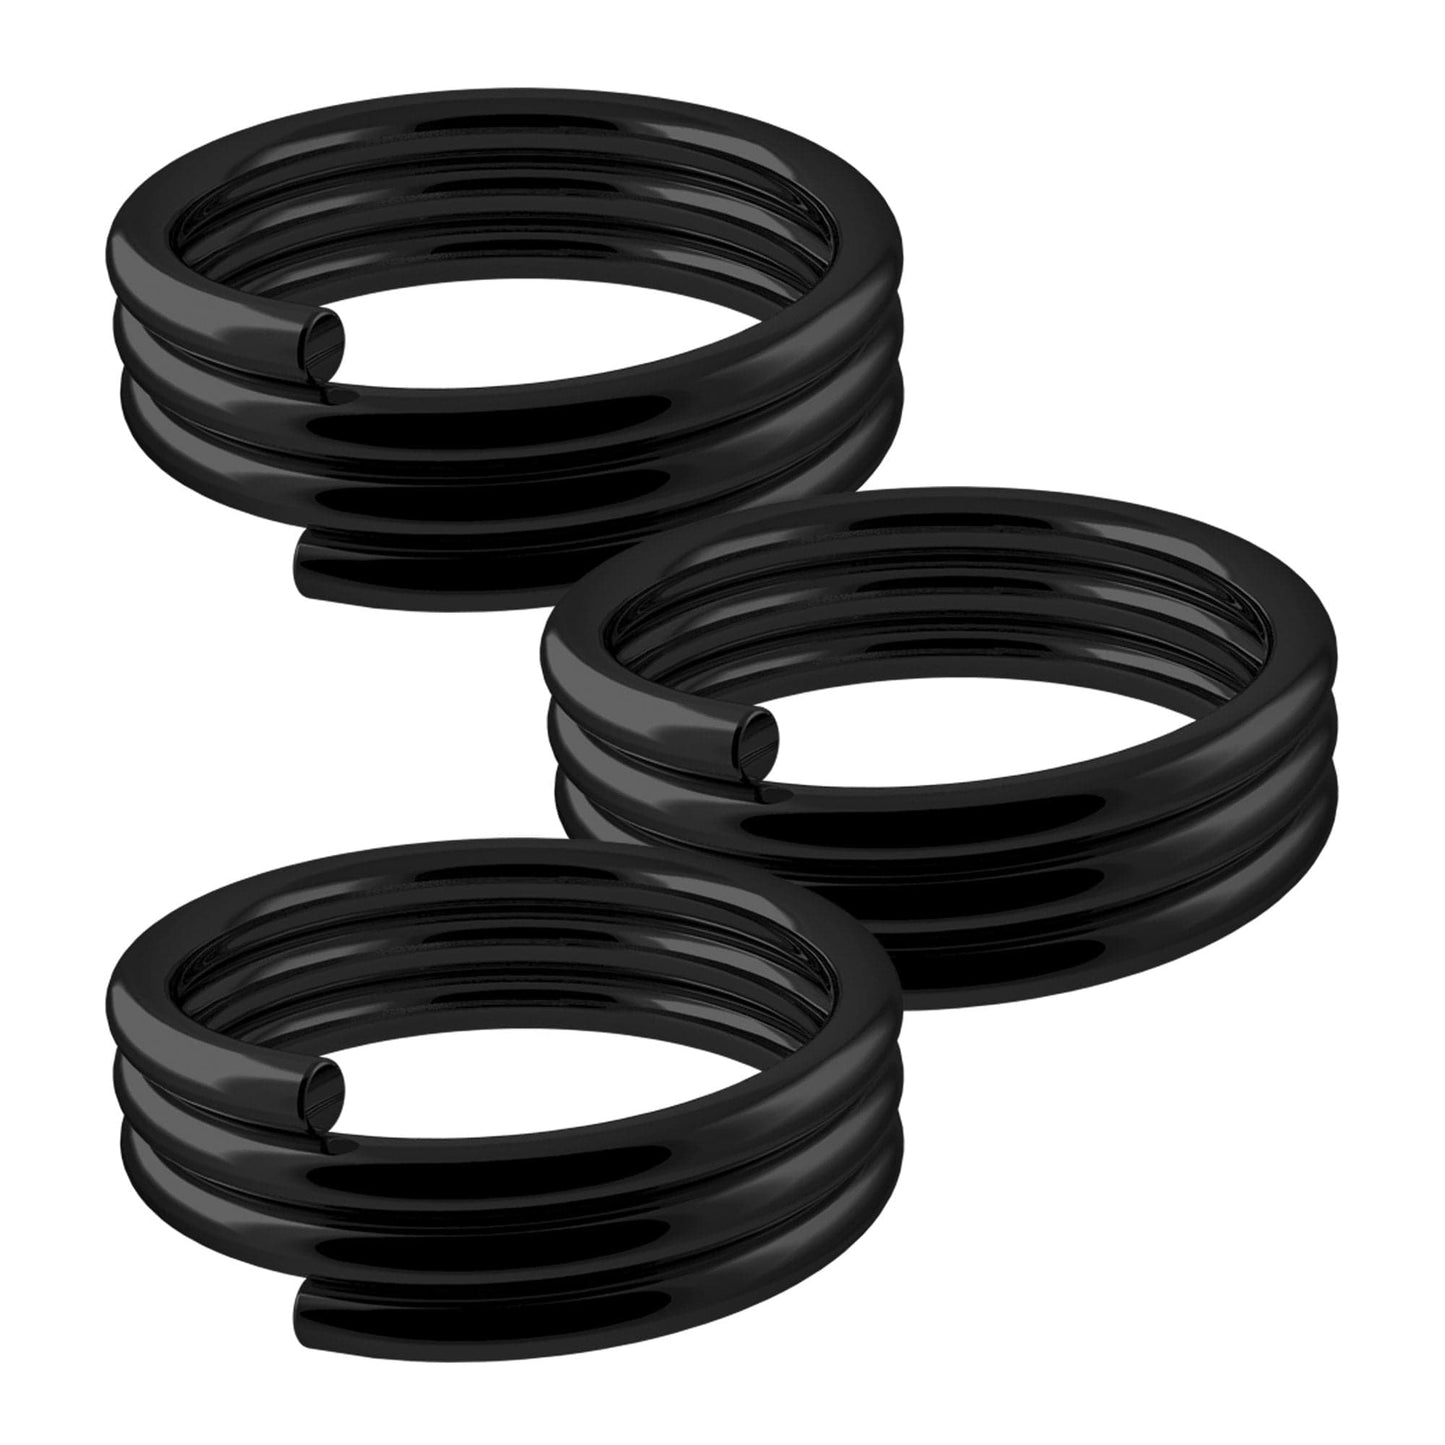 Designa Springs - for use with Nylon Shafts - 1 Set (3) Black